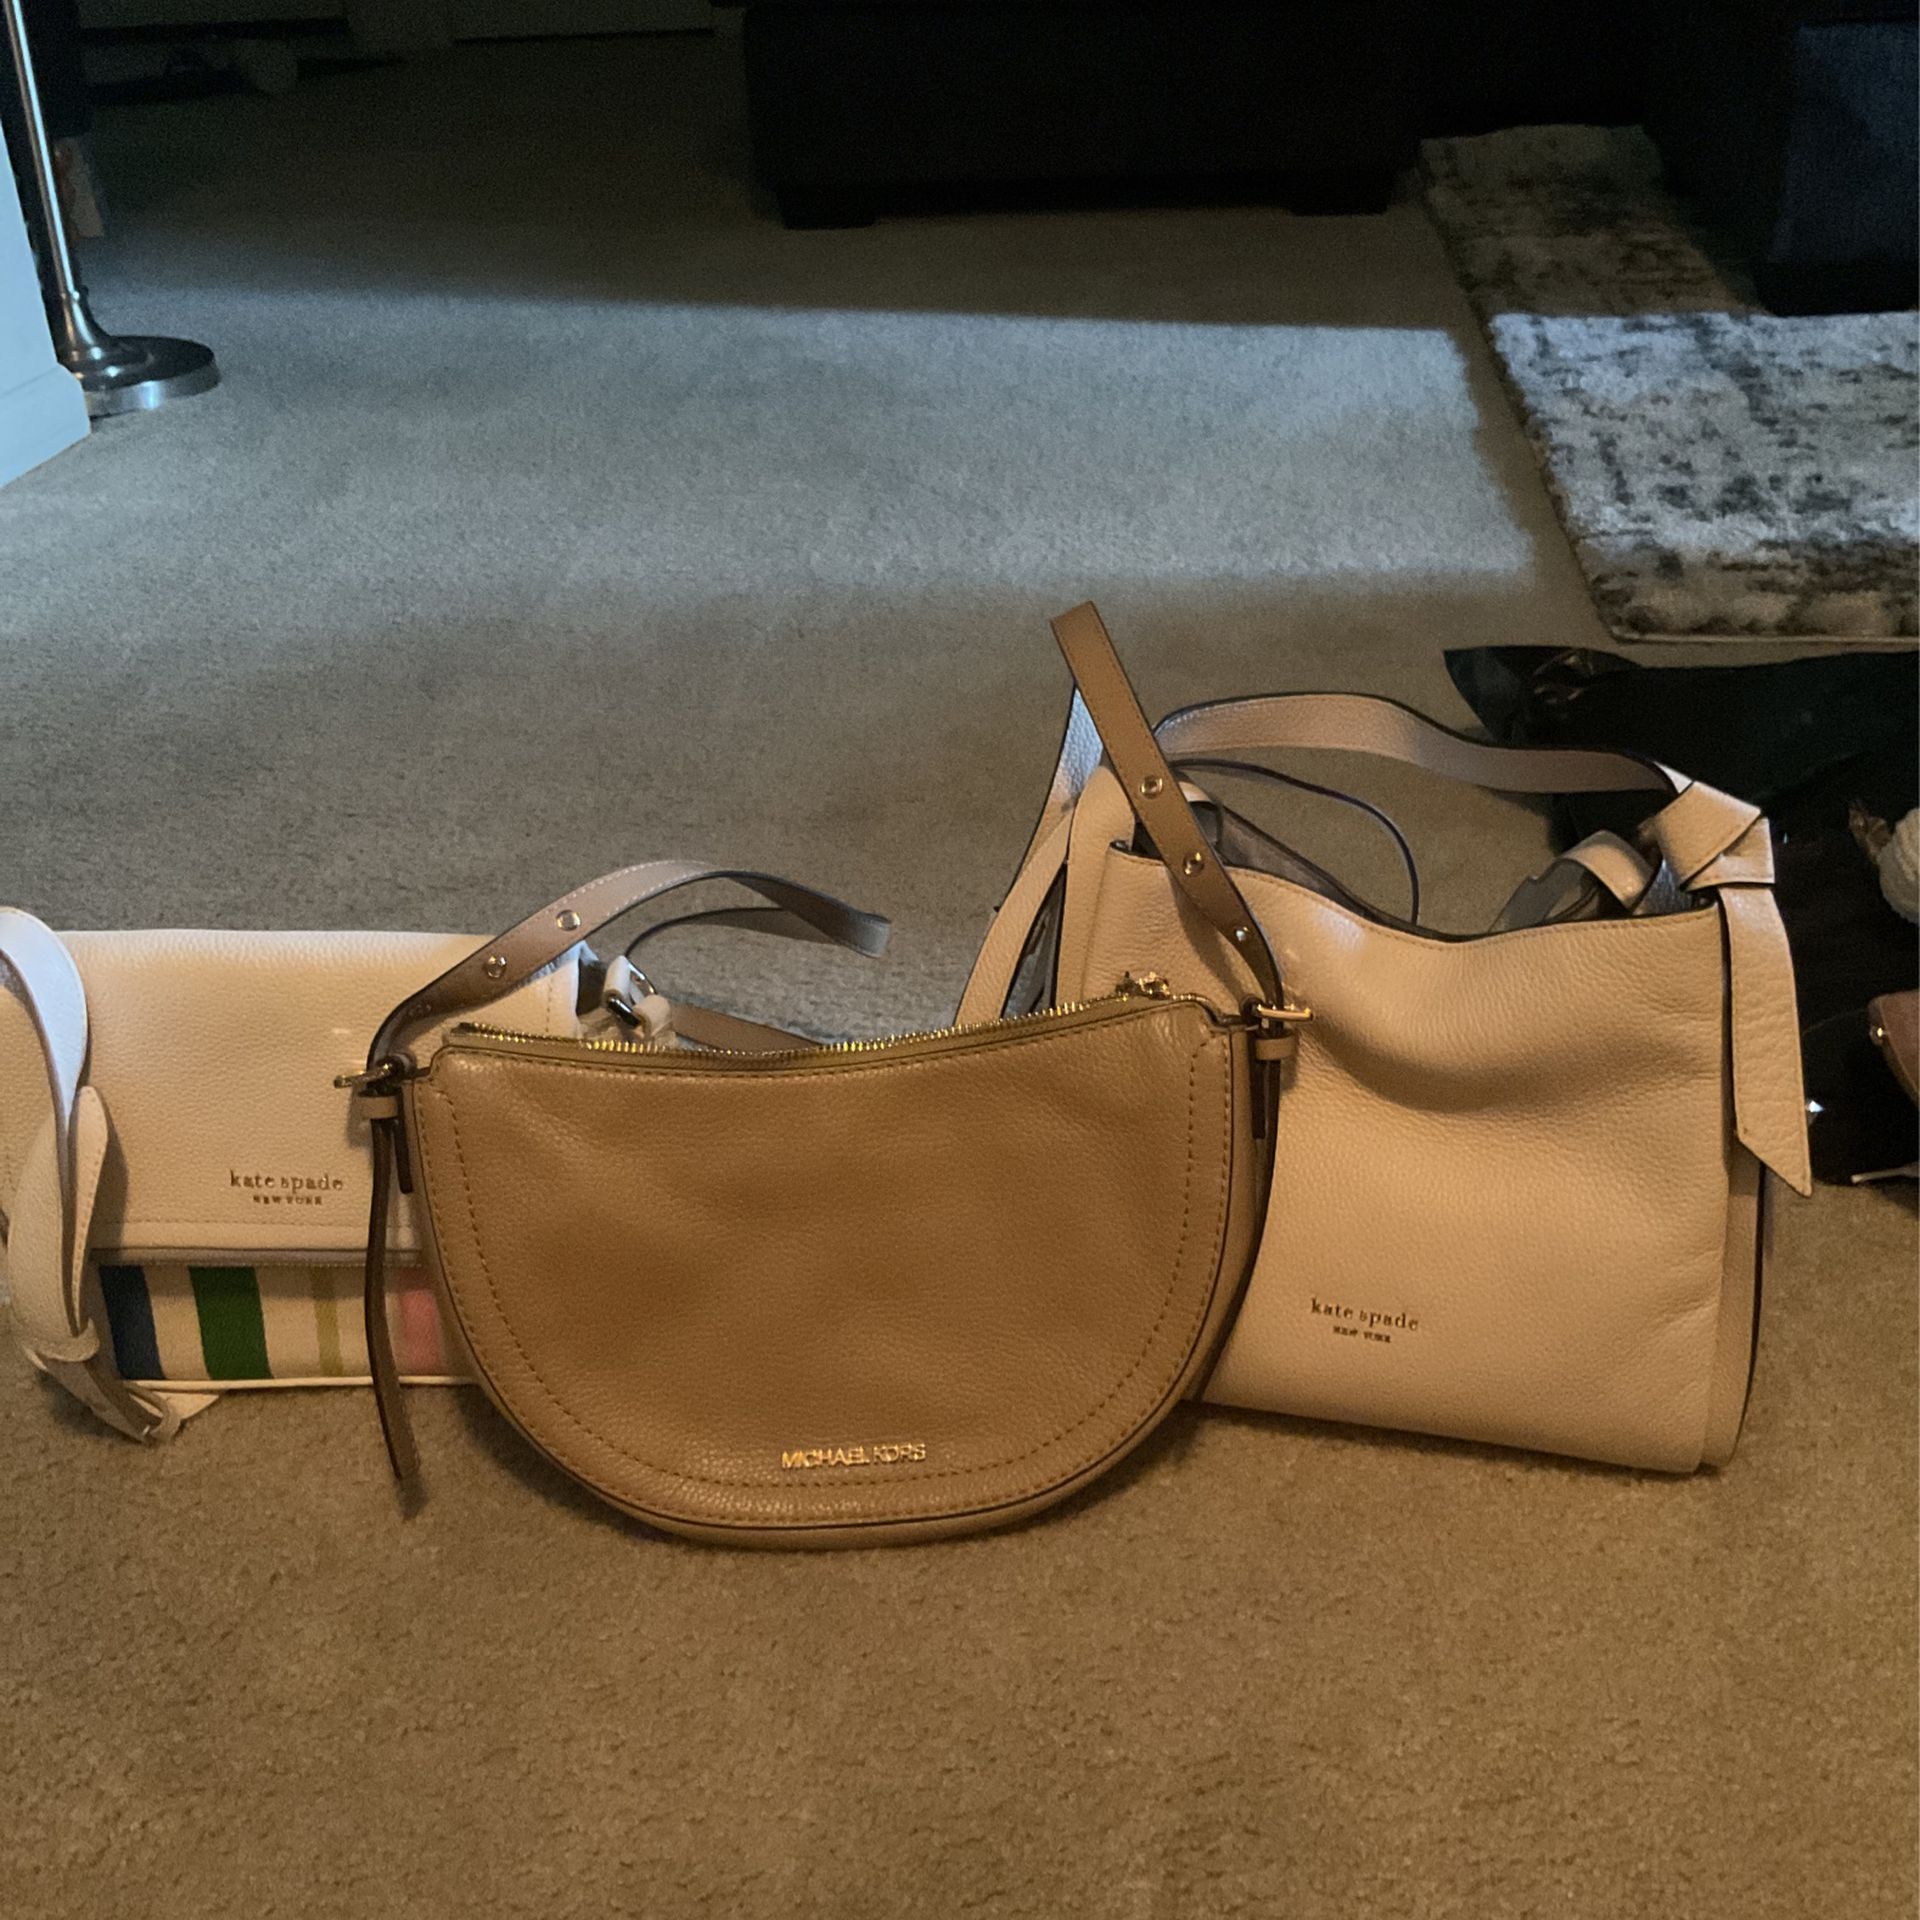 New orange Jessica Simpson Crossbody bag purse MSRP $98 mini tote Satchel  for Sale in Santee, CA - OfferUp